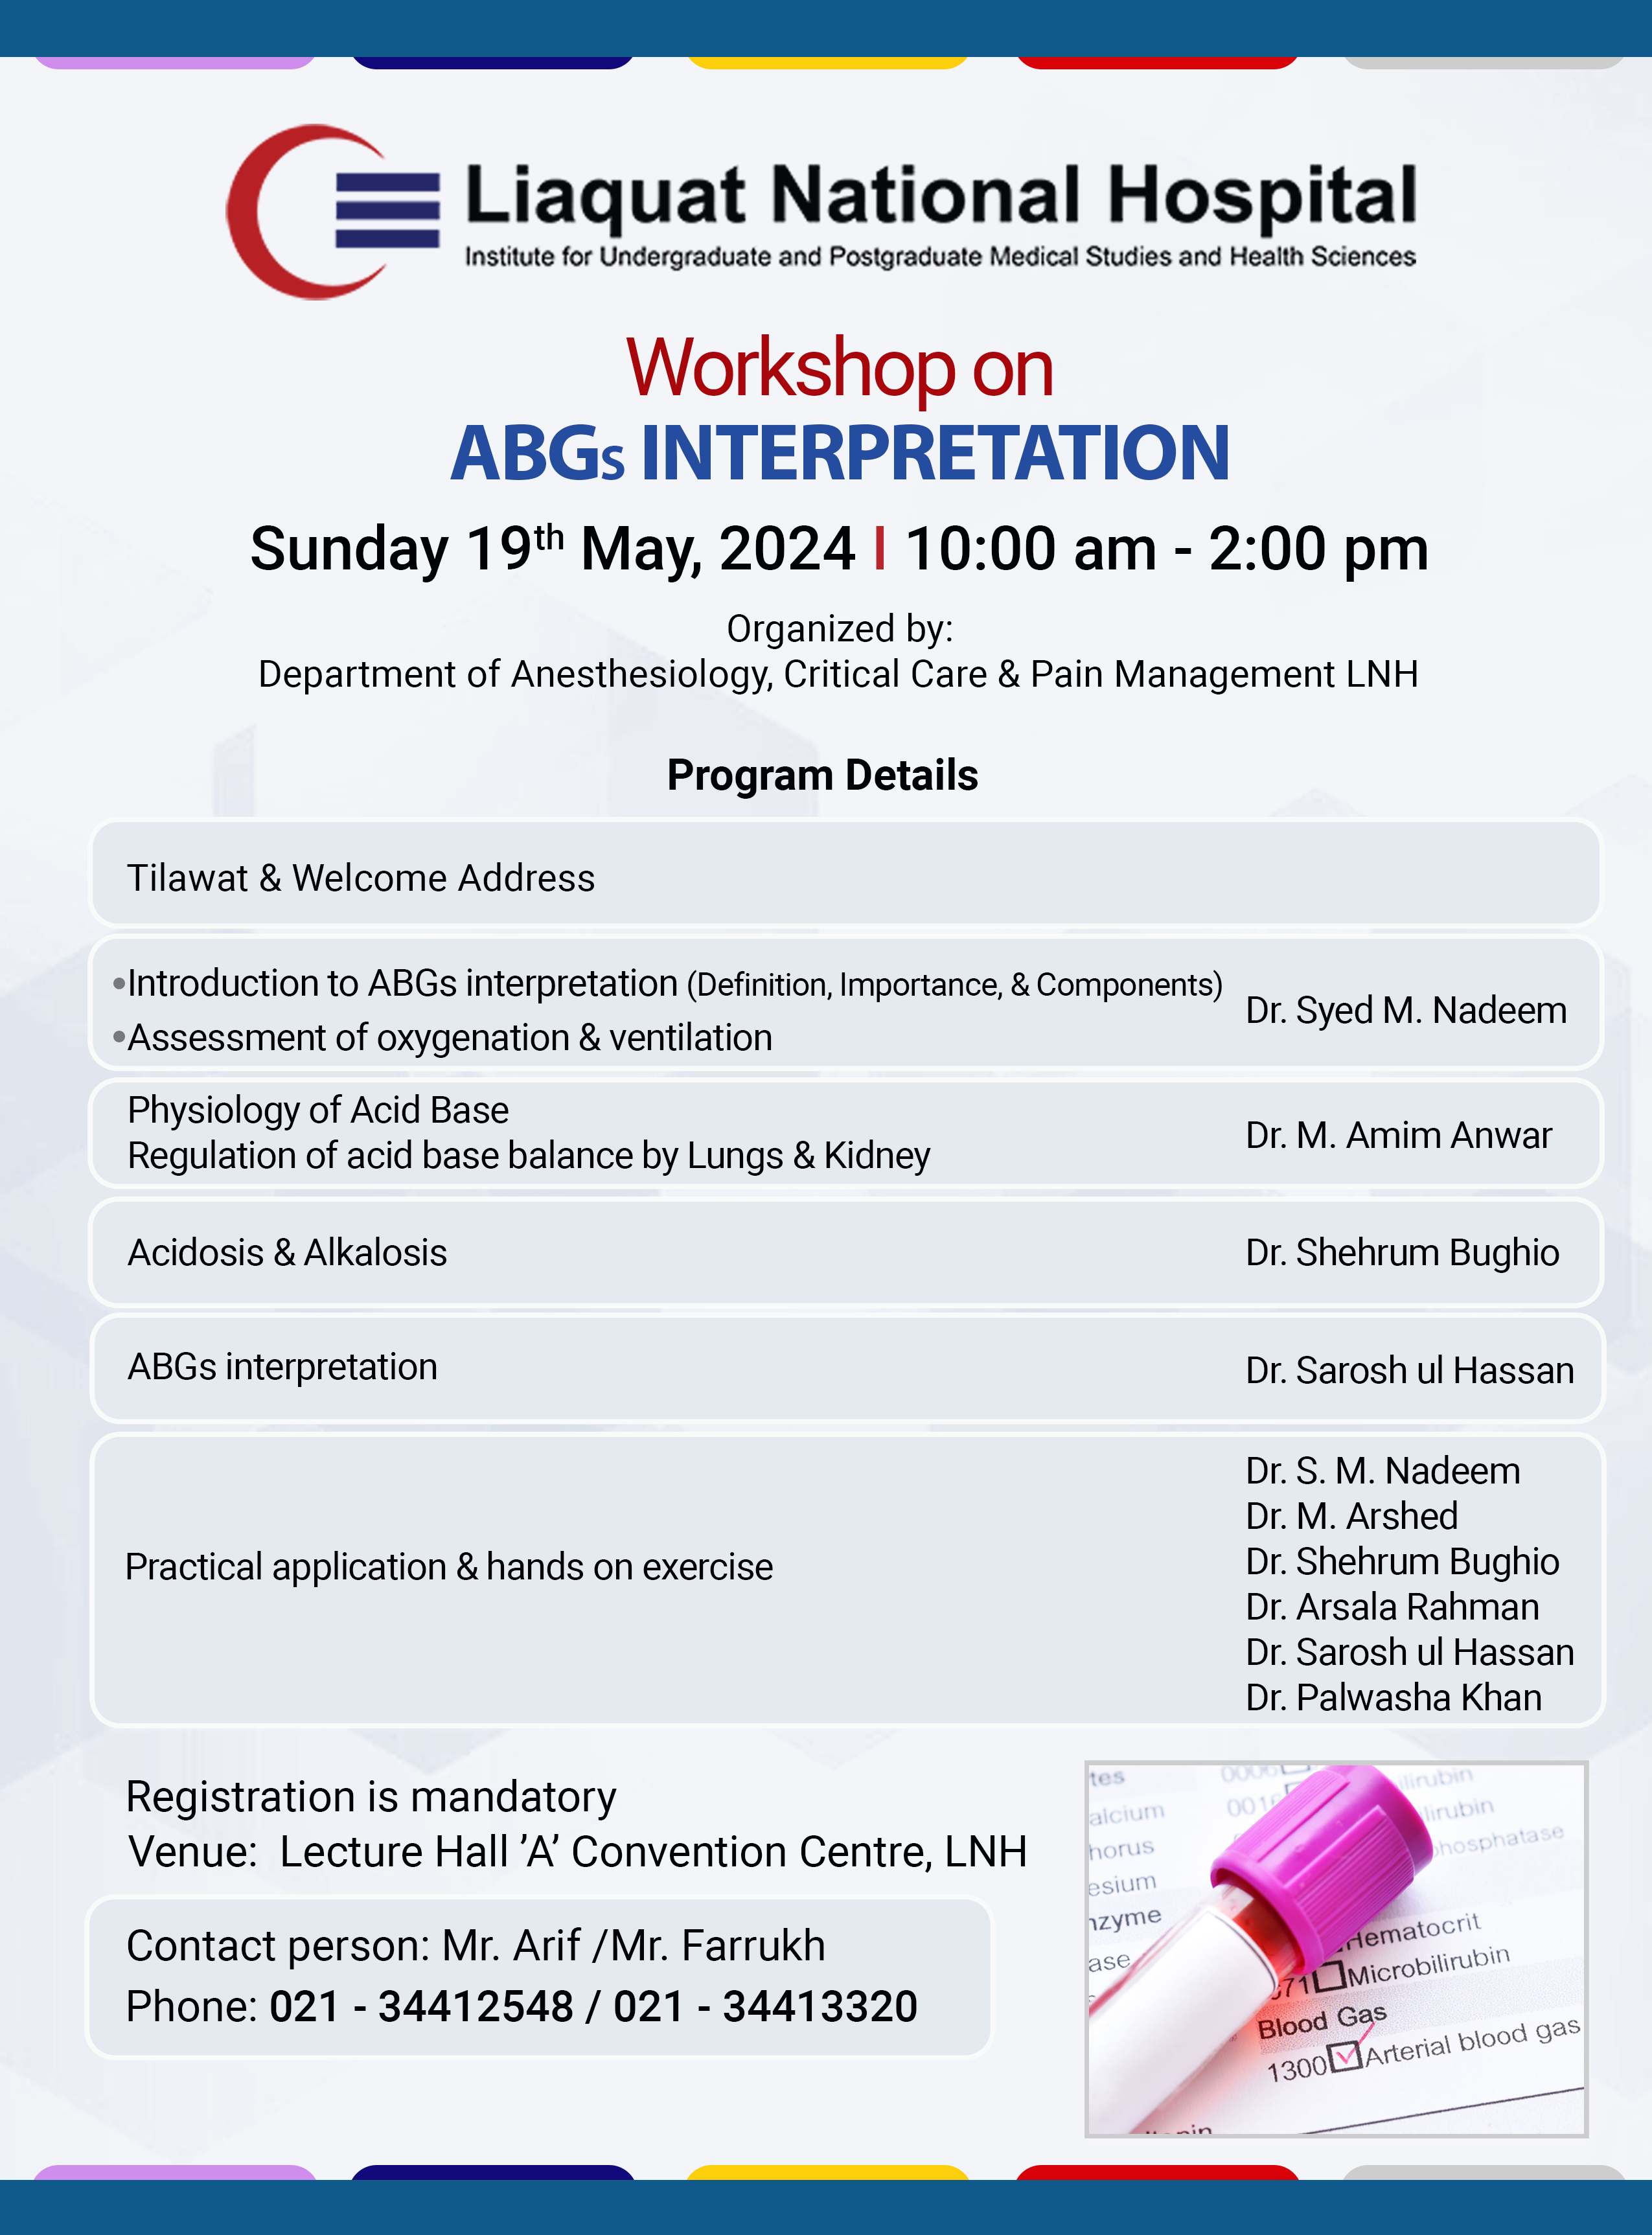 Workshop on ABGs Interpretation, May 19, 2024